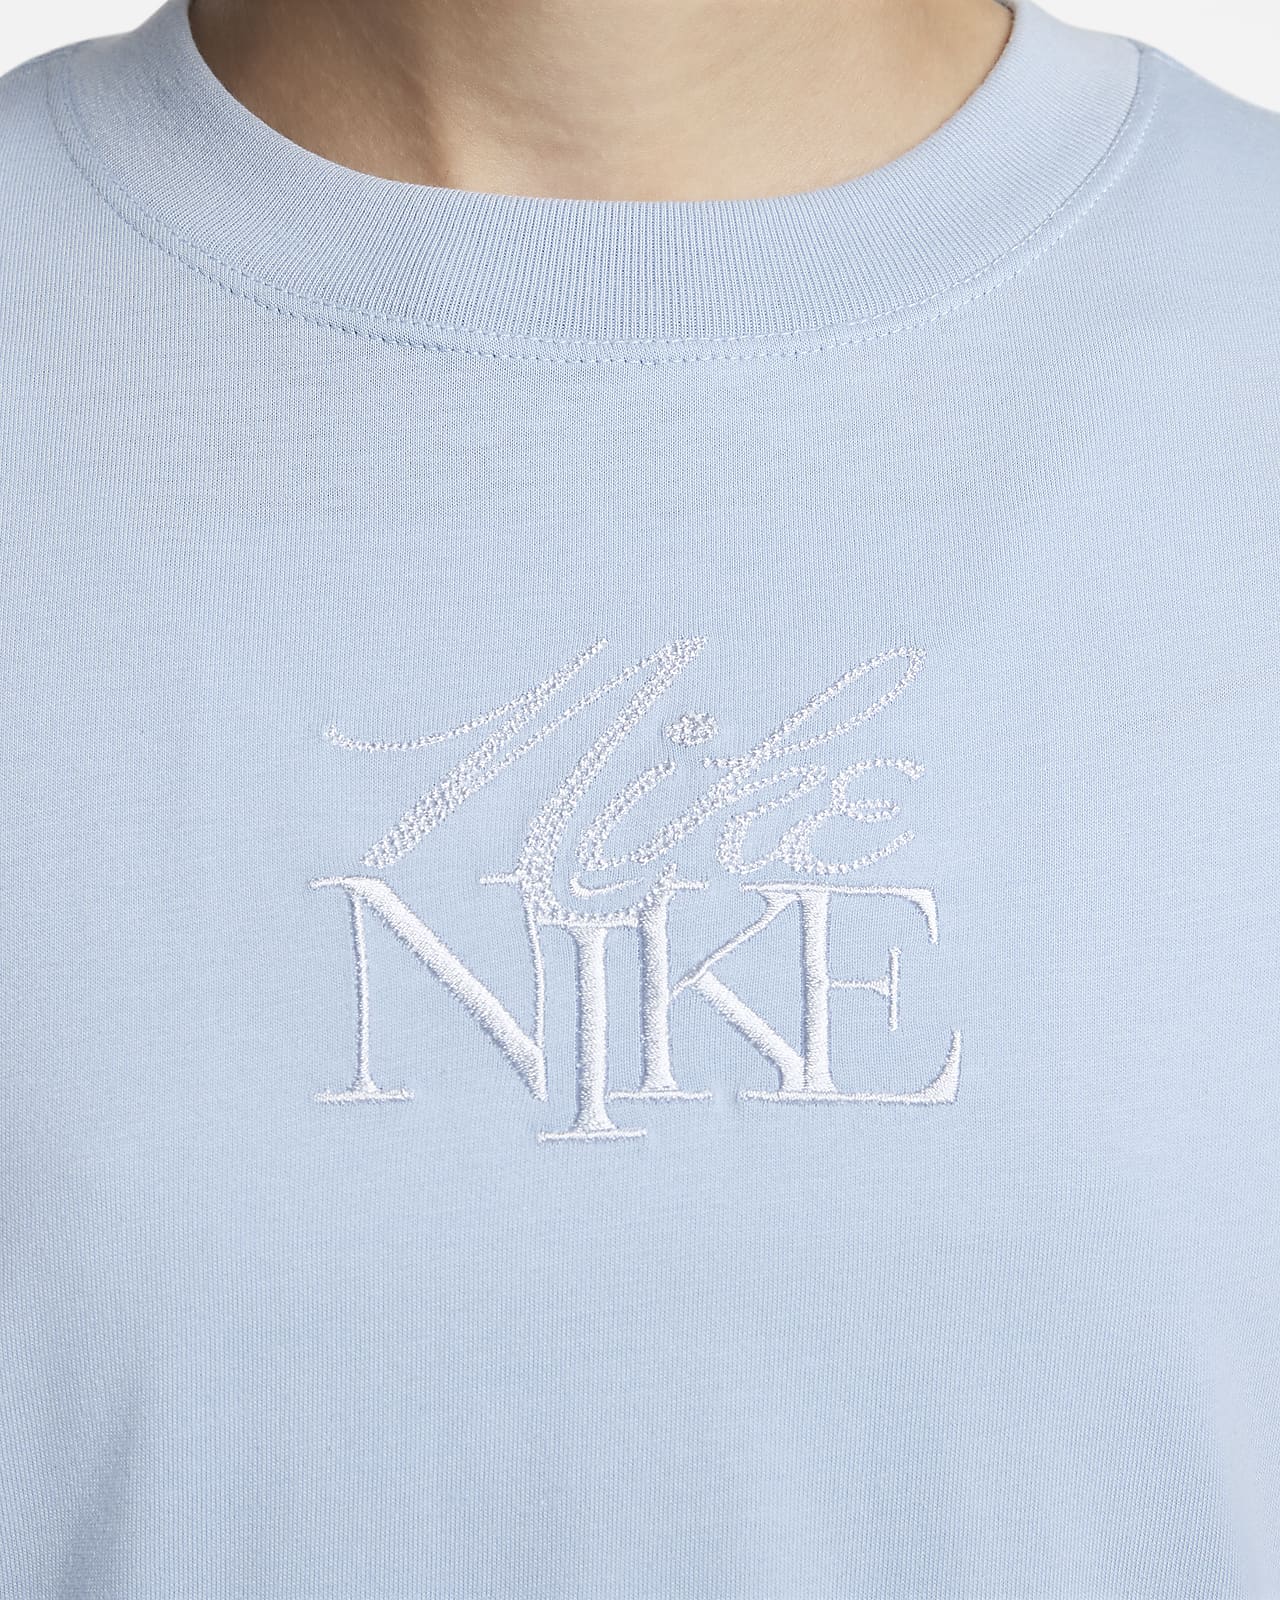 T-shirt à motif Nike Sportswear pour femme